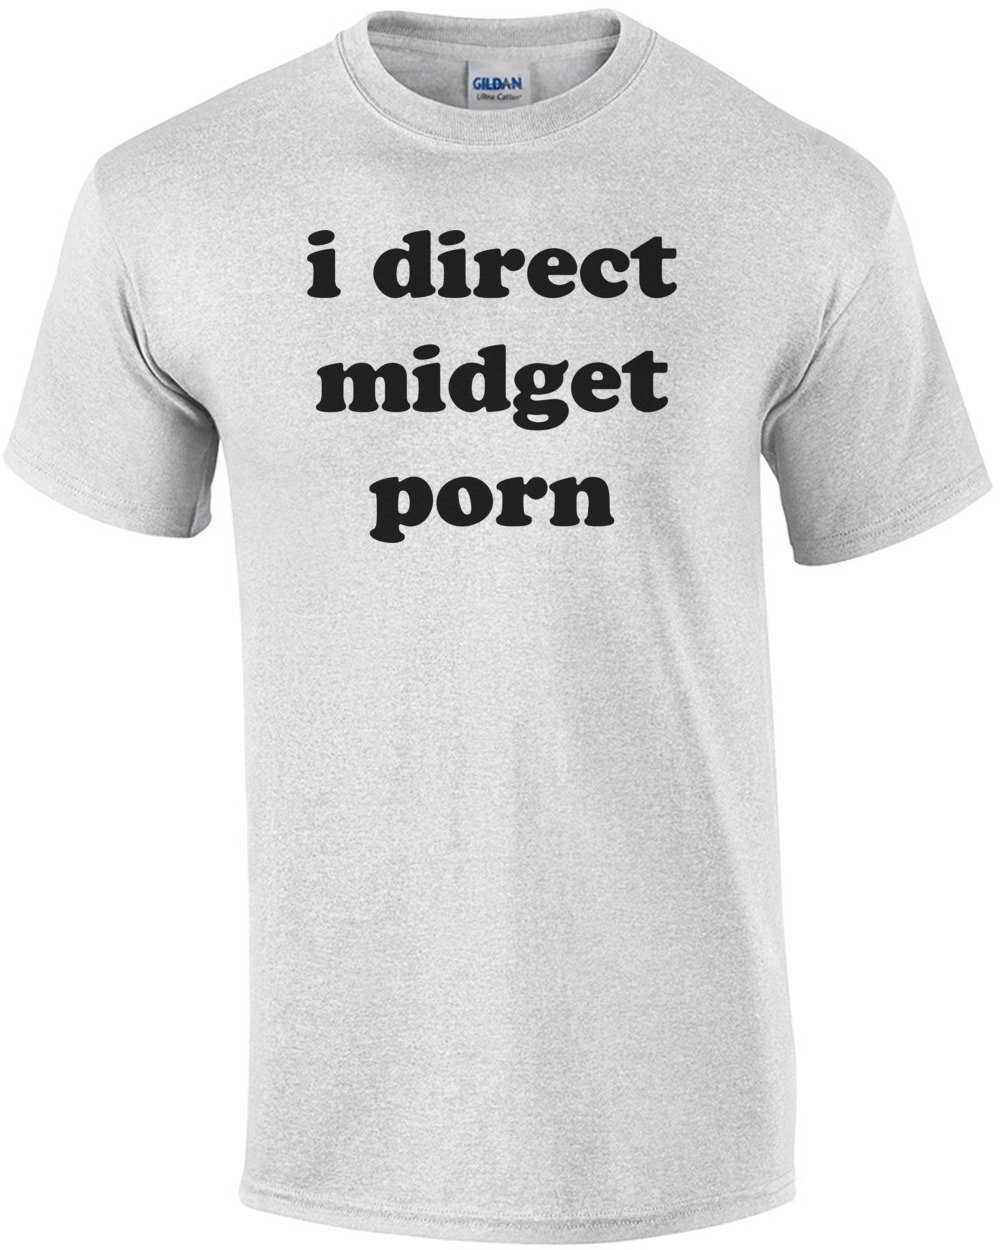 i direct midget porn Shirt eBay 